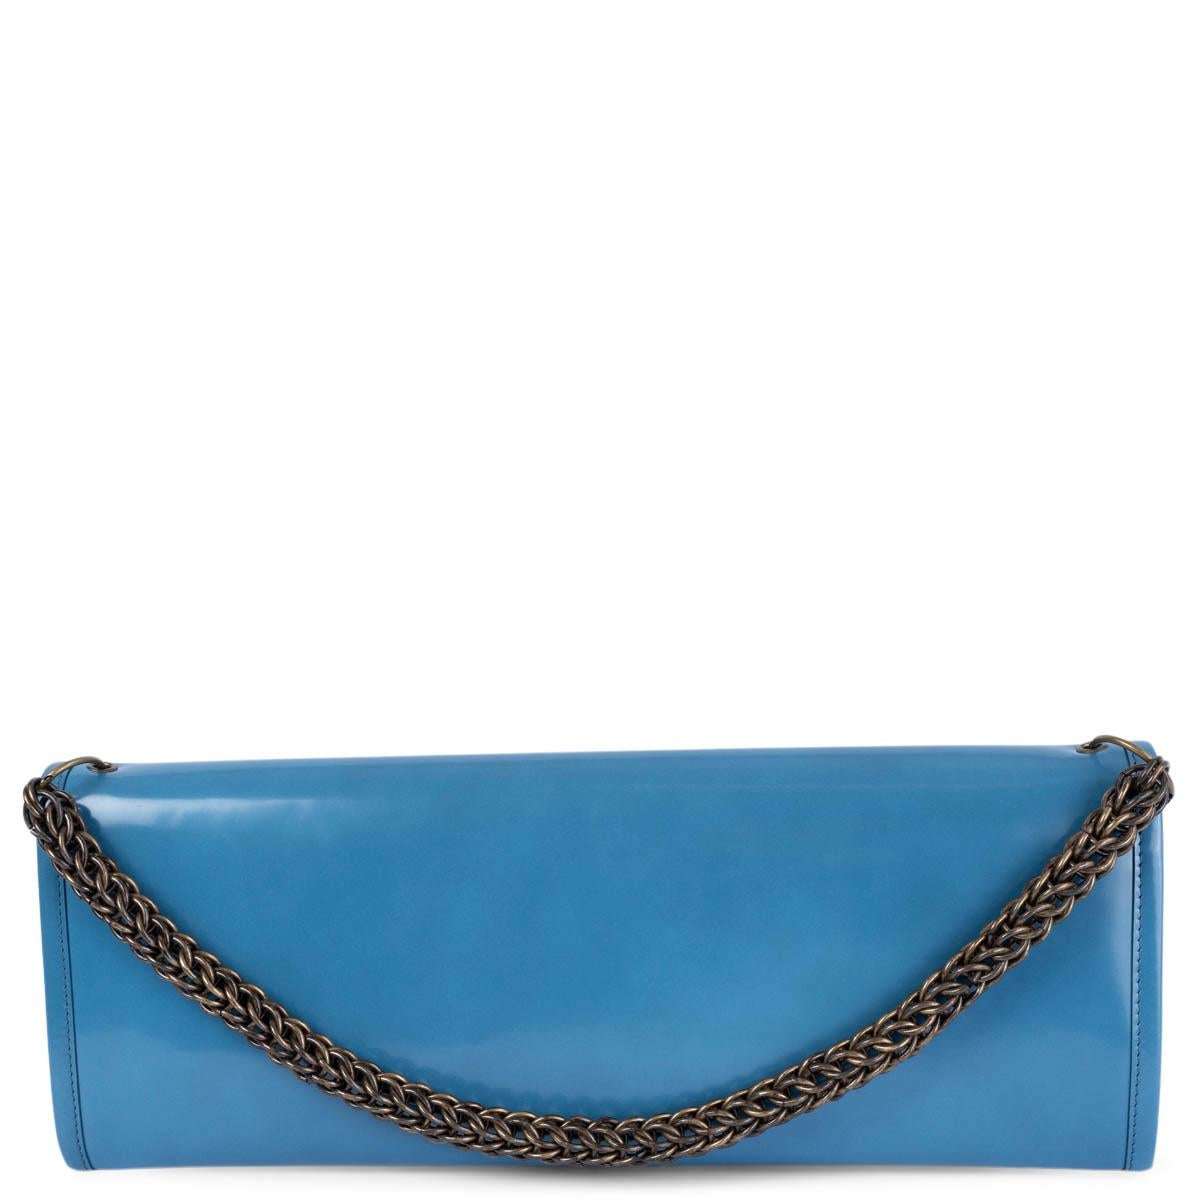 Blue VETEMENTS x EASTPAK blue leather 2017 CHAIN Clutch Bag For Sale